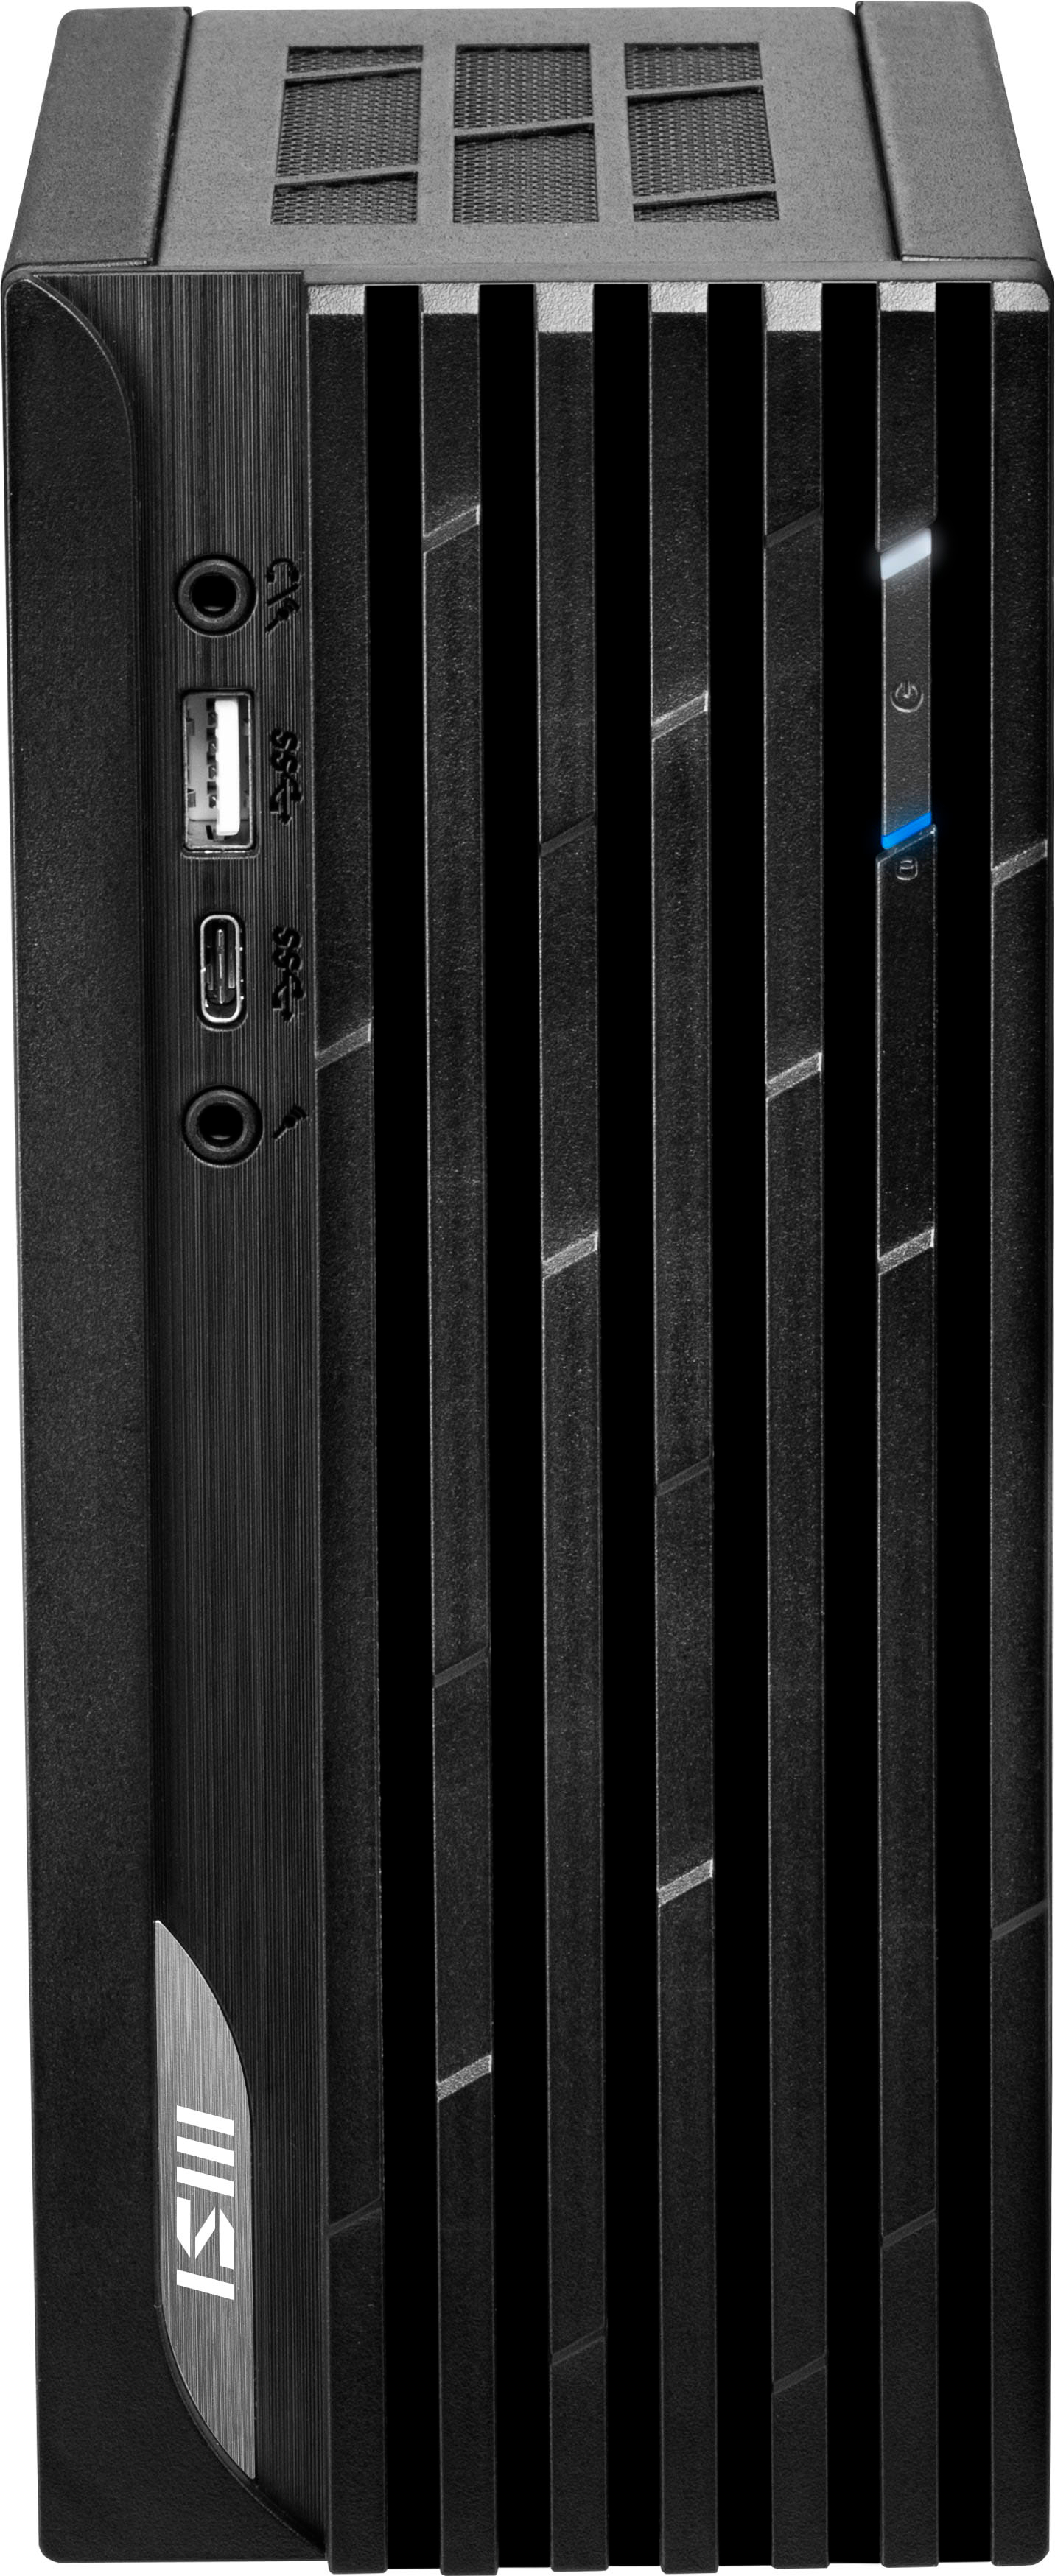 Back View: Dell - Refurbished OptiPlex Desktop - Intel Core i5 - 4GB Memory - 250GB Hard Drive - Black/silver